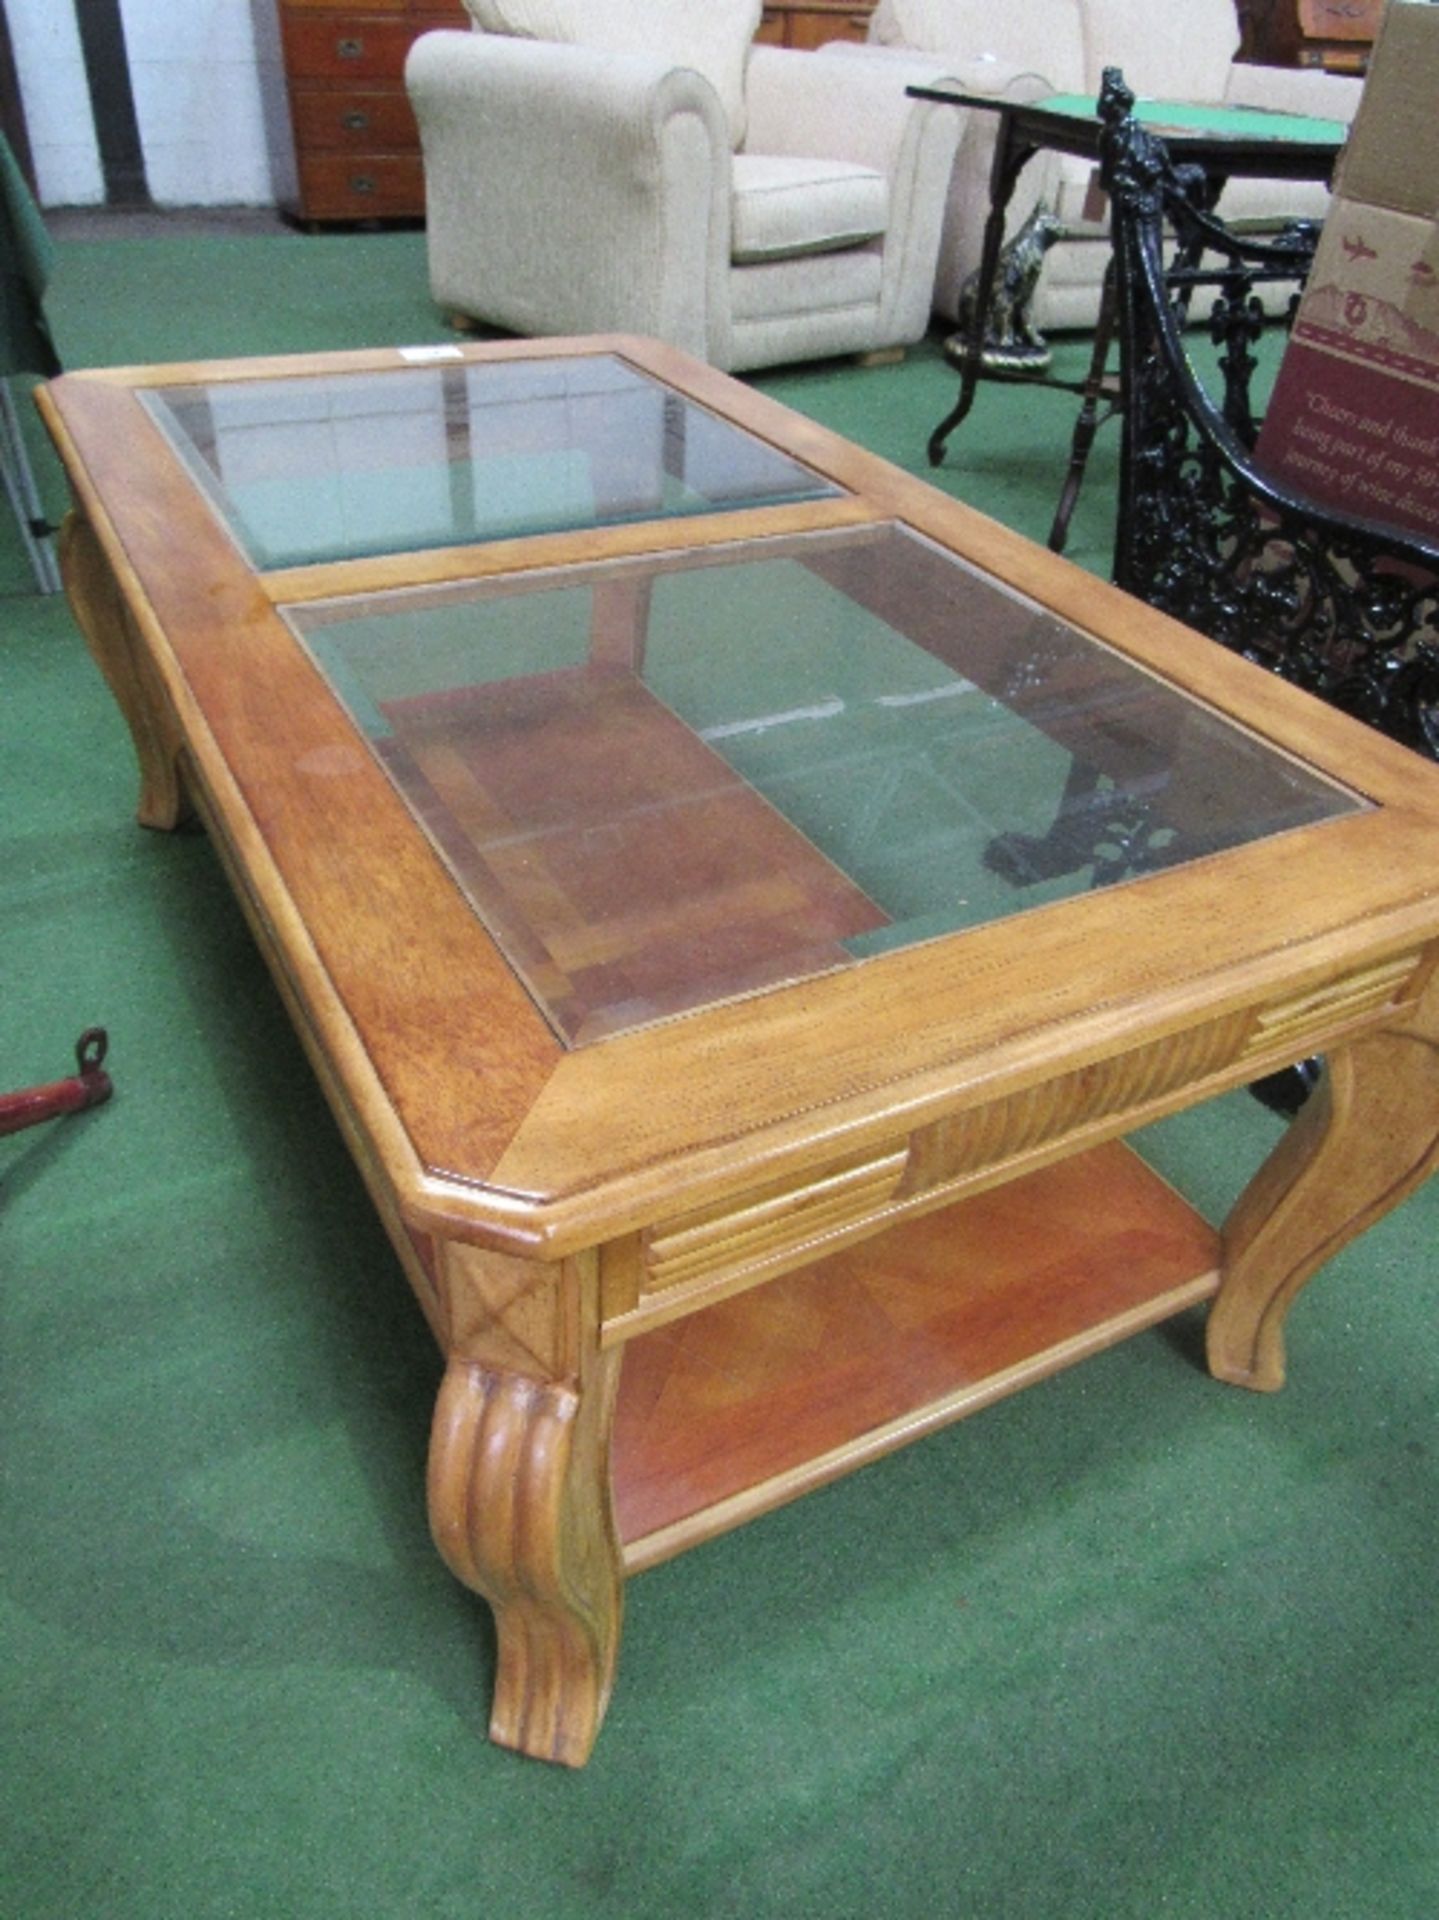 Twin glass panel coffee table with shelf beneath, 205cms x 67cms x 51cms. Estimate £20-40